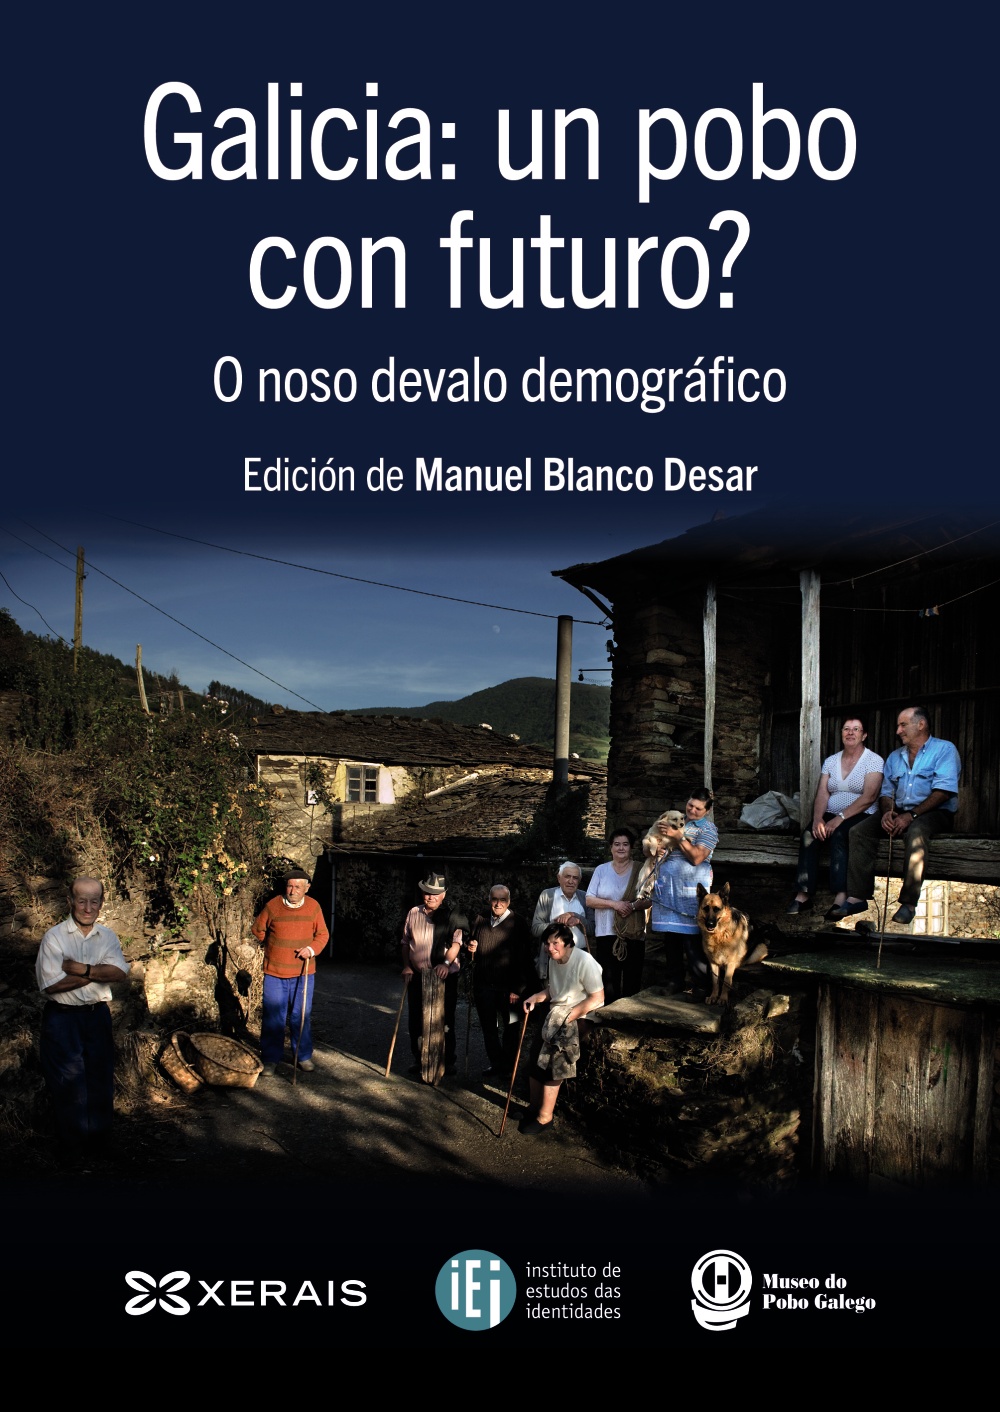 Galicia: un pobo con futuro?